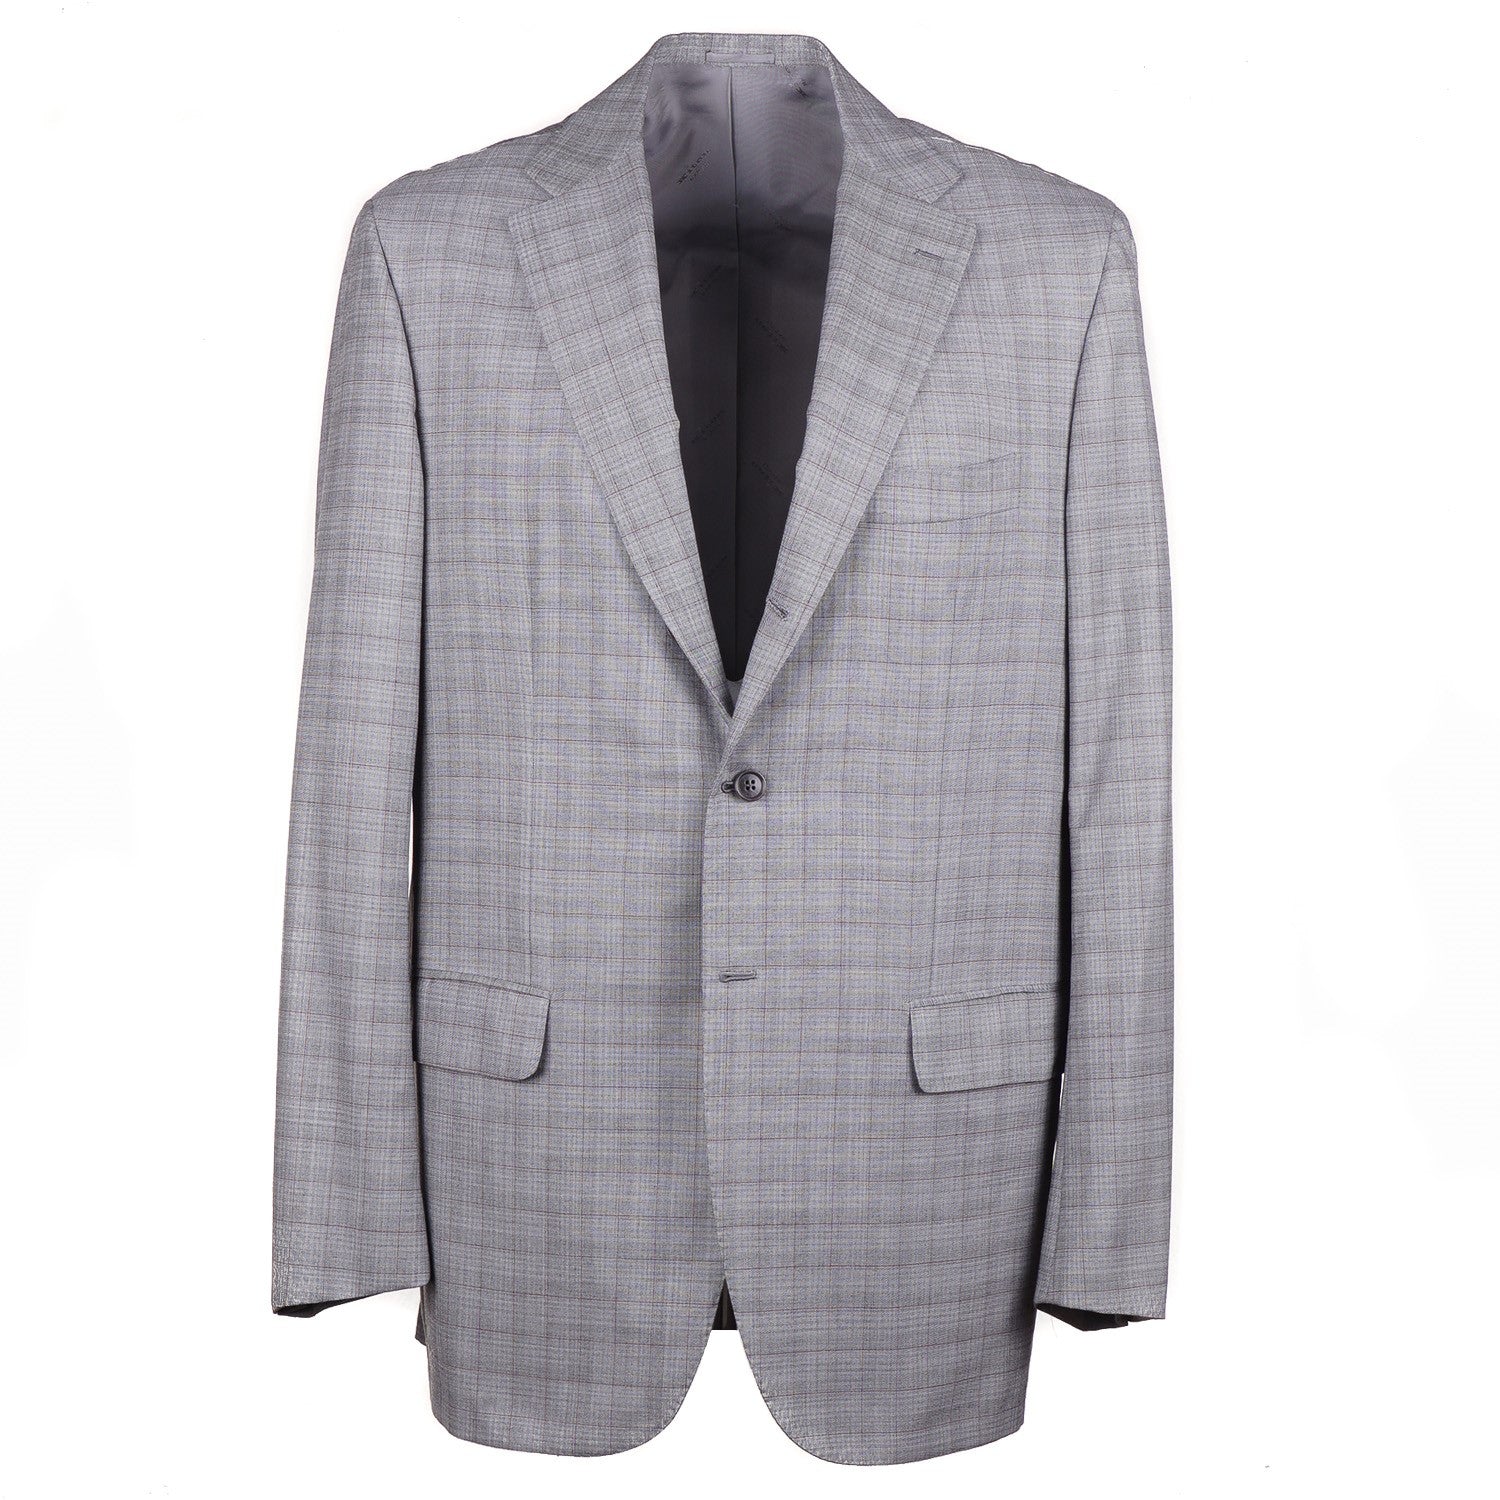 Kiton Super 180s Wool Suit – Top Shelf Apparel